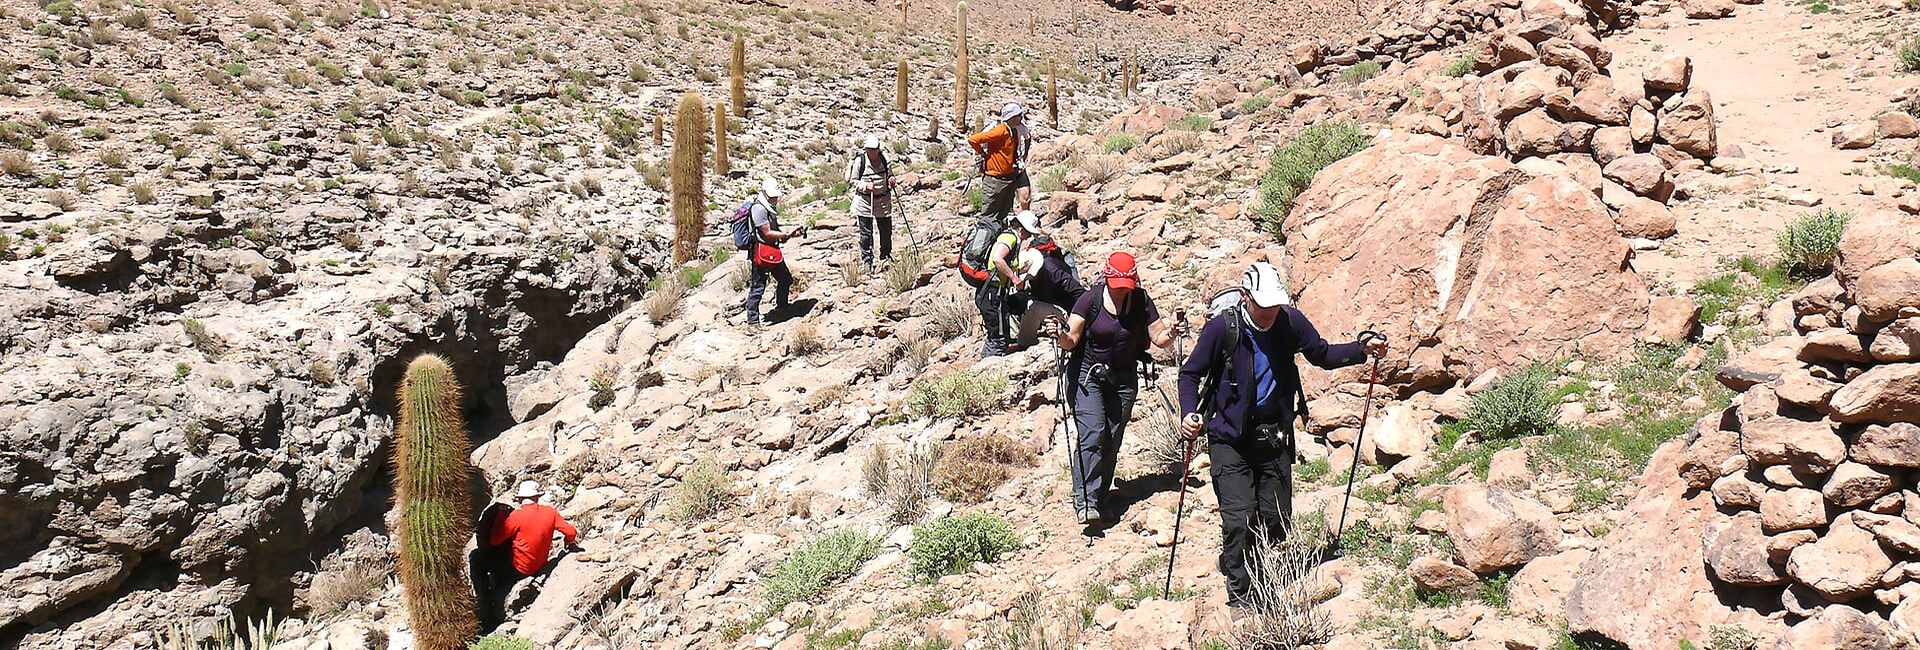 Hiking Group in the Atacama Desert